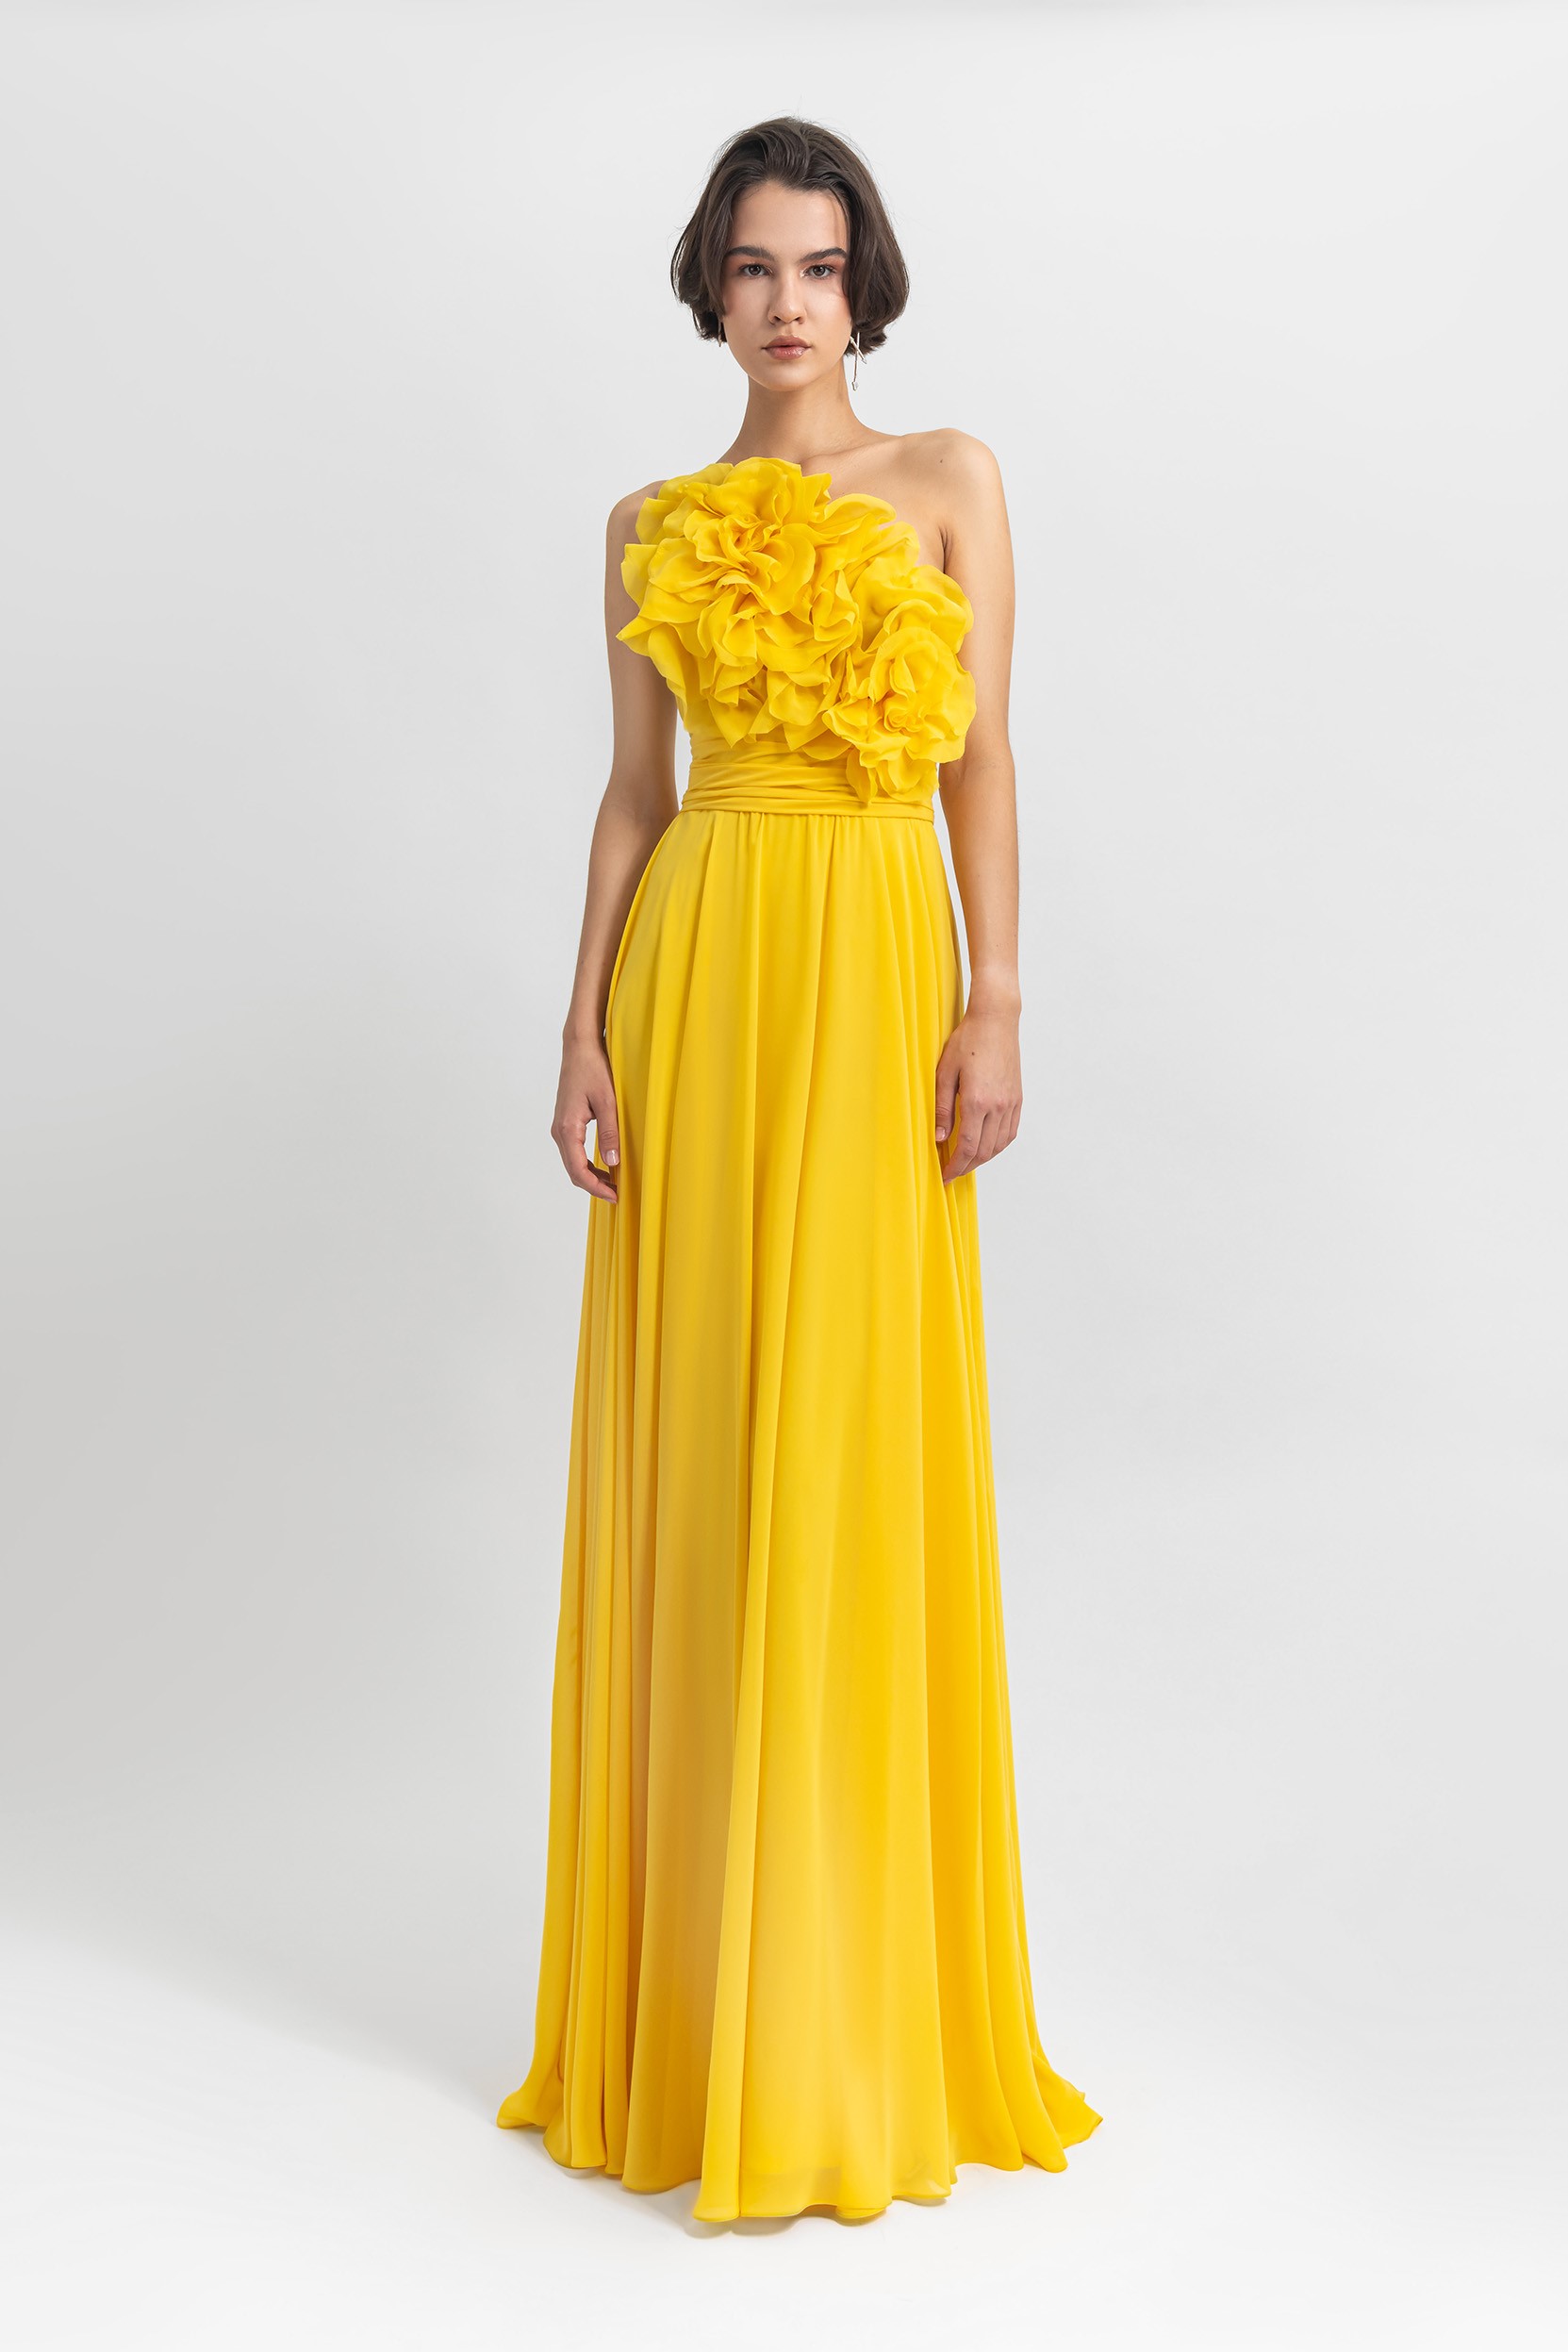 Buy Long Chiffon Dress, 1960s, Yellow, Maxi Dress, Formal, Yellow Flowers,  11, 4,6,formal Dress Online in India - Etsy